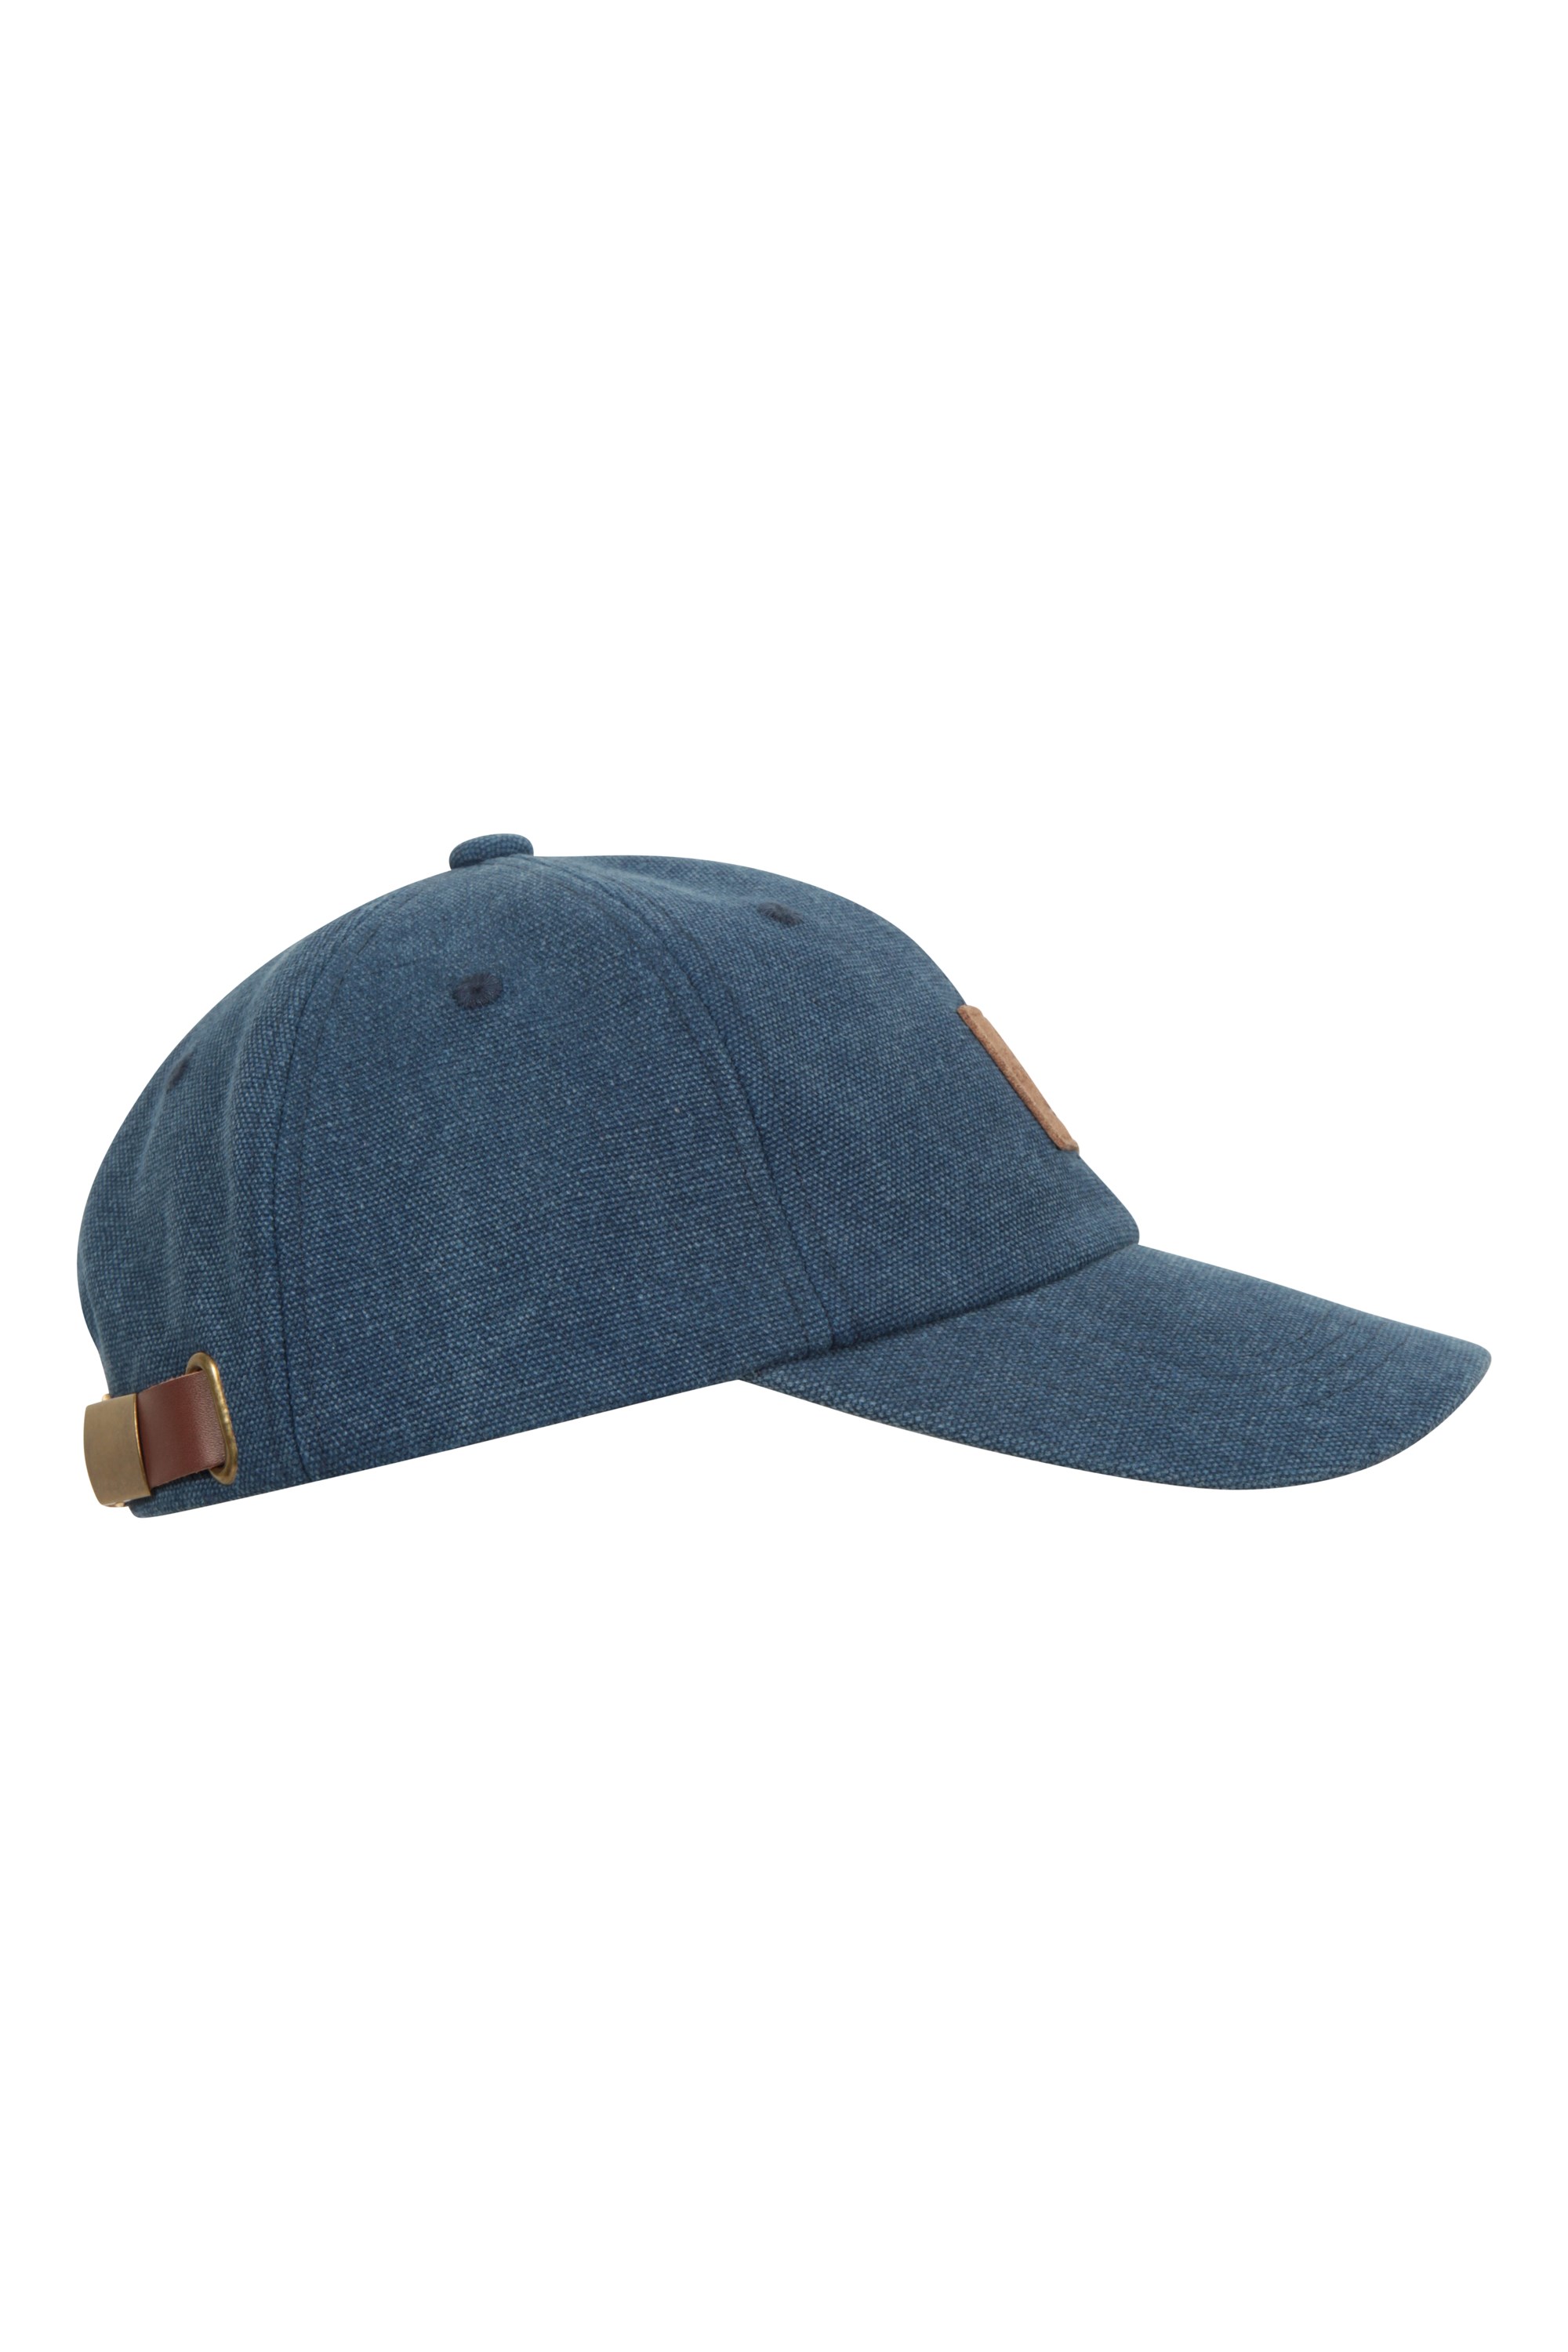 Mountain Warehouse Mens Baseball Cap - 100% Cotton All Season Hat